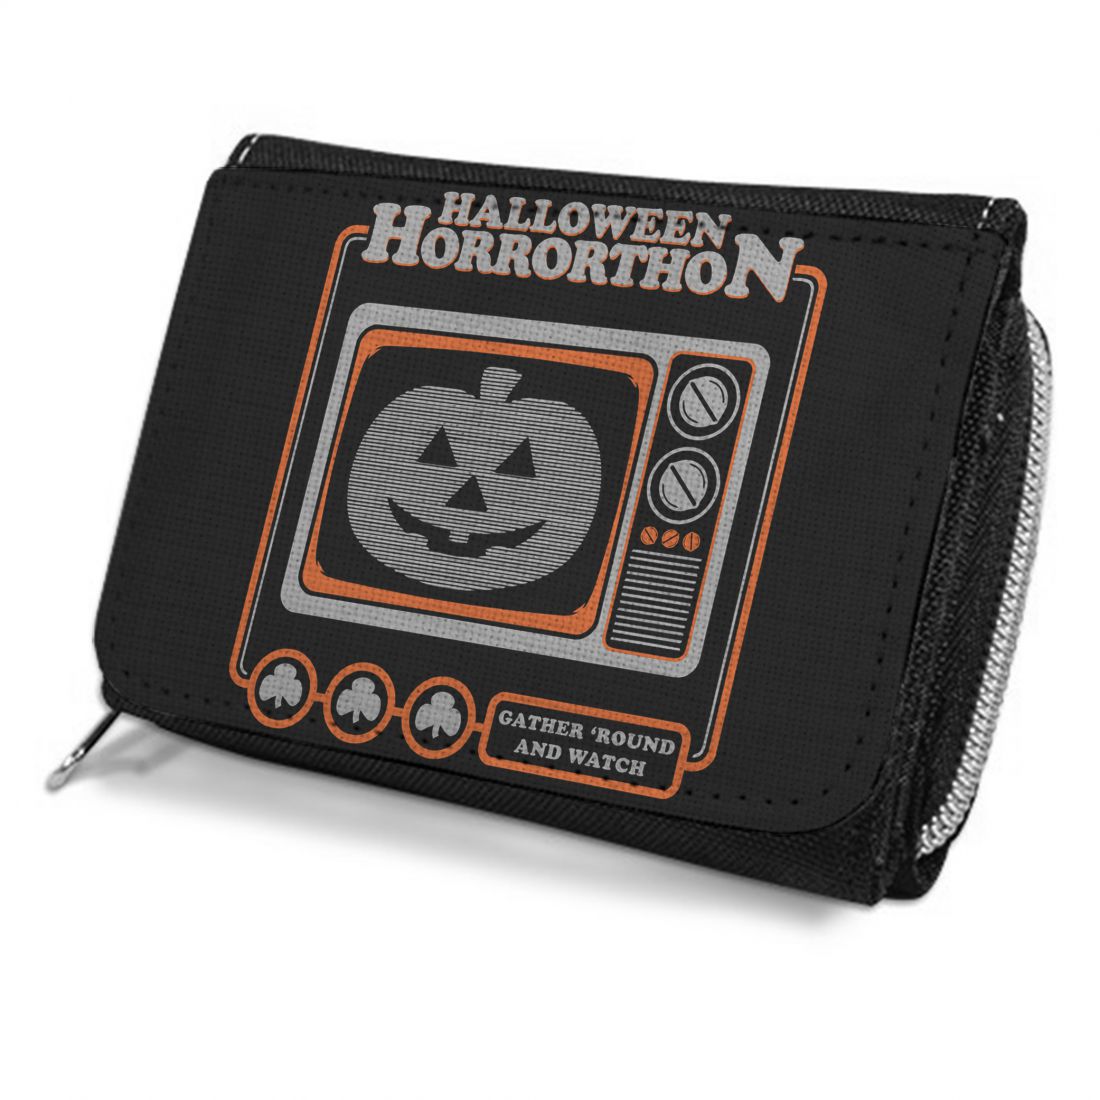 Halloween Horrorthon